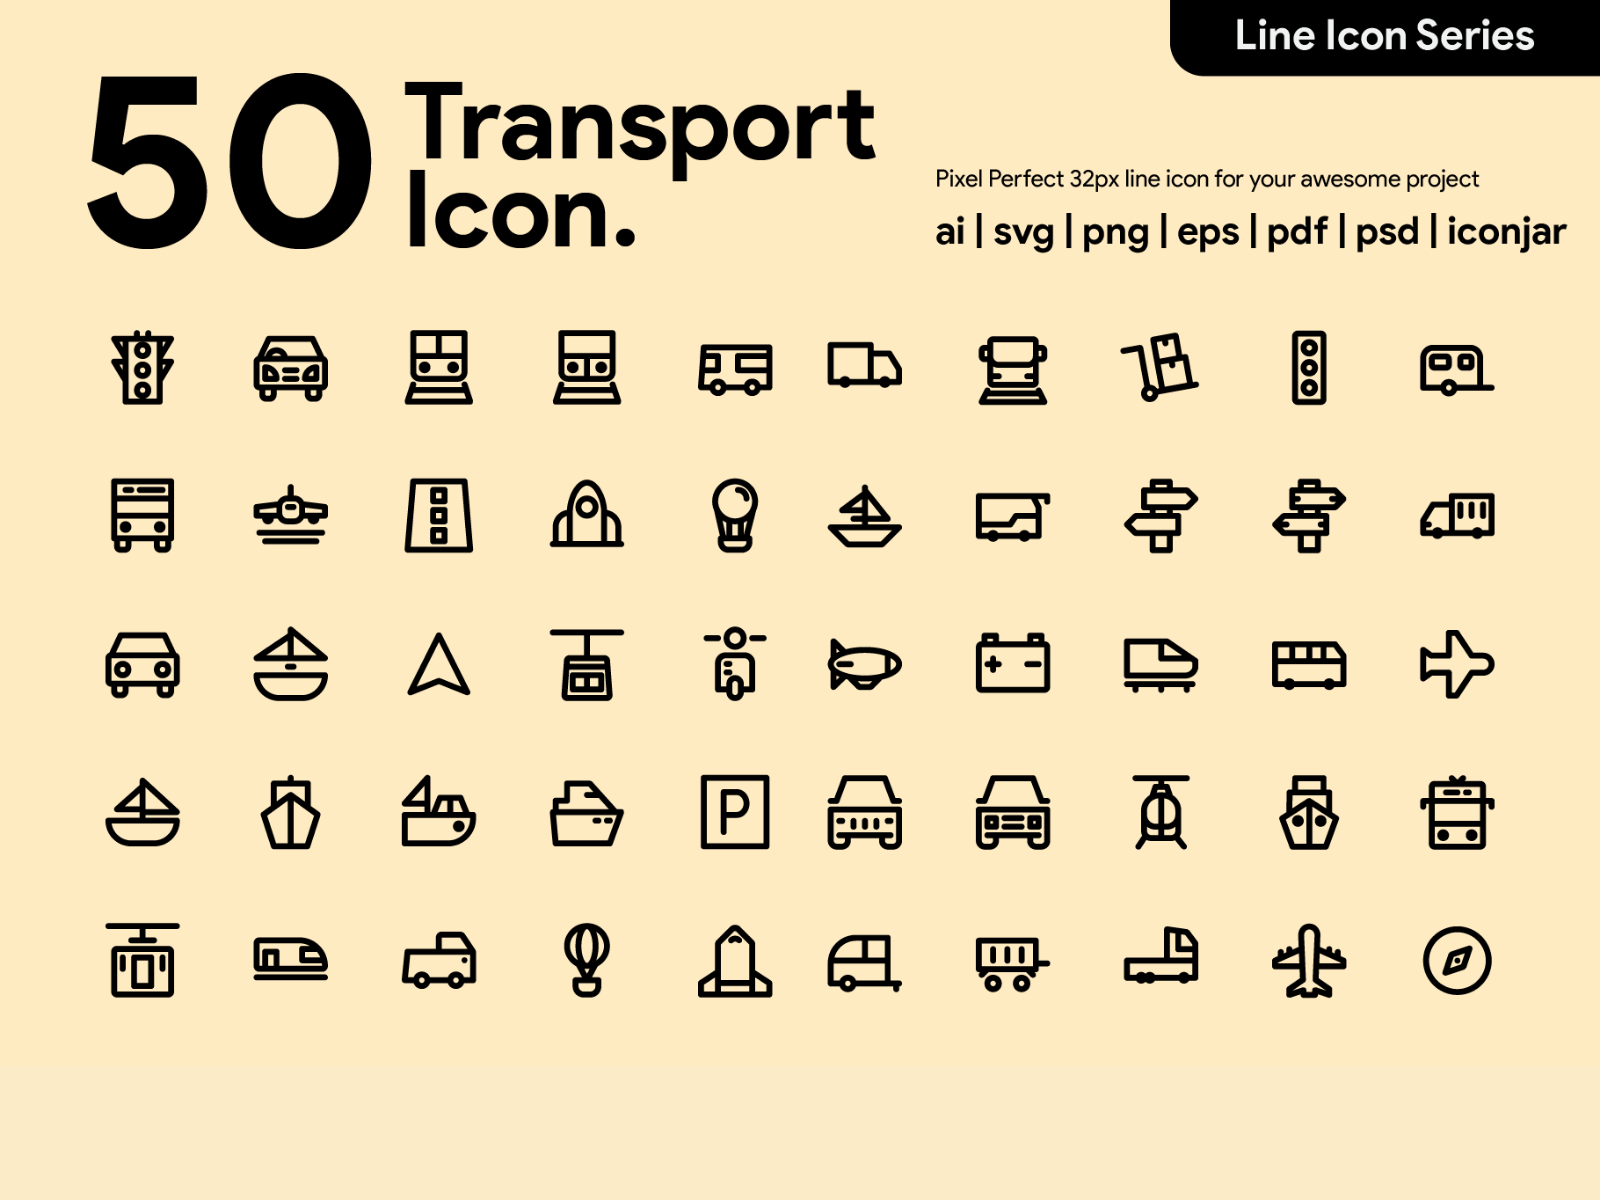 App icons design idea #288: Kawaicon - 50 transportation Line Icon